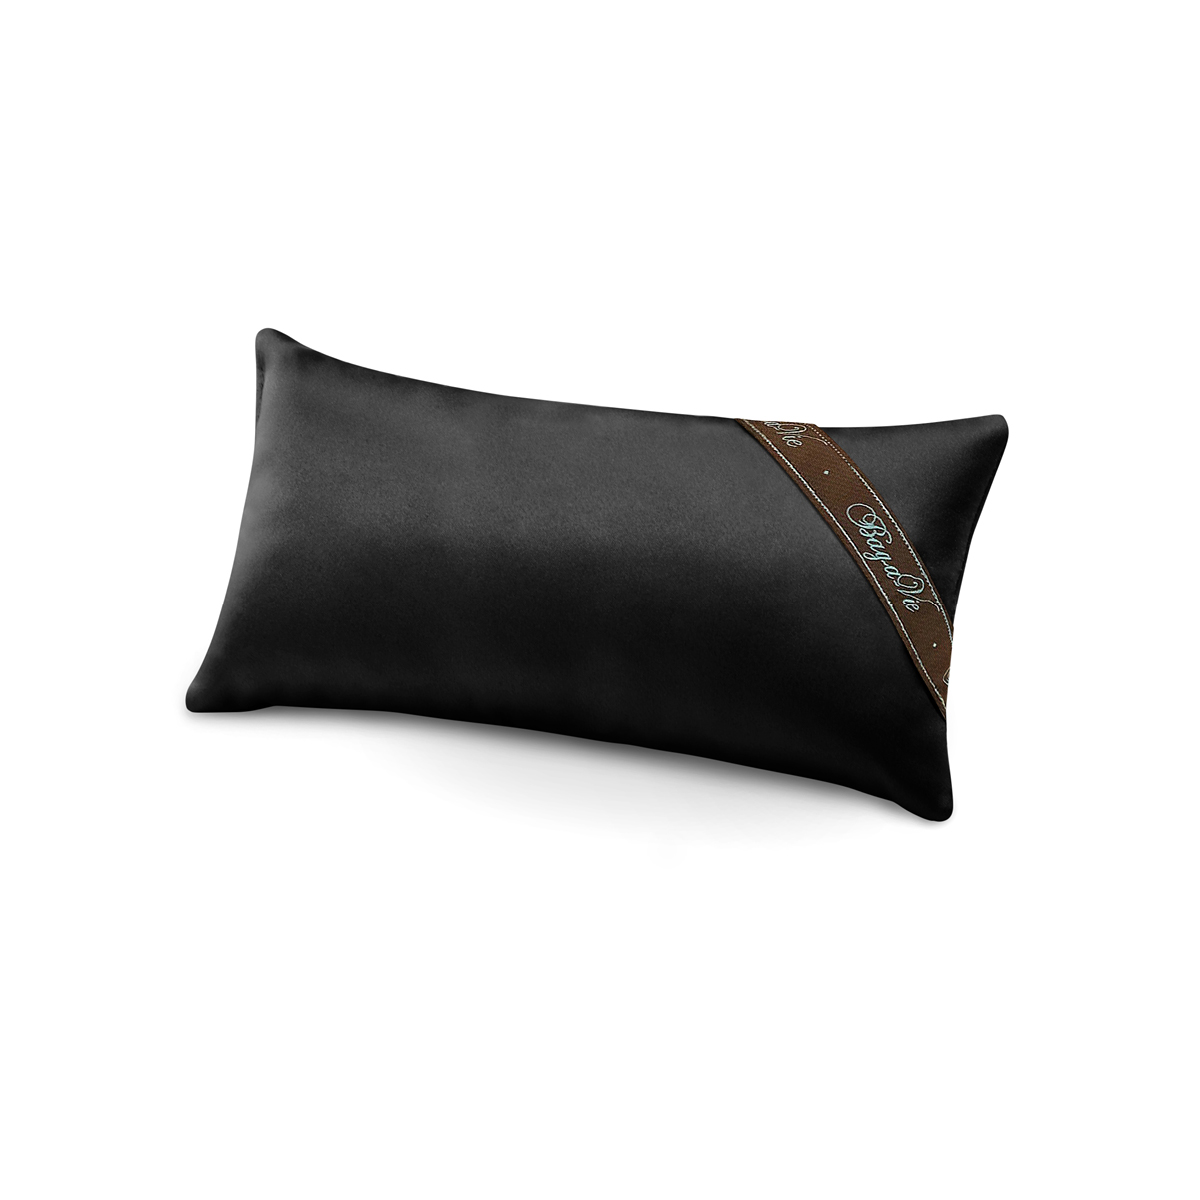 Black Satin Pillow Luxury Bag Shaper For Classic and 2.55 Medium